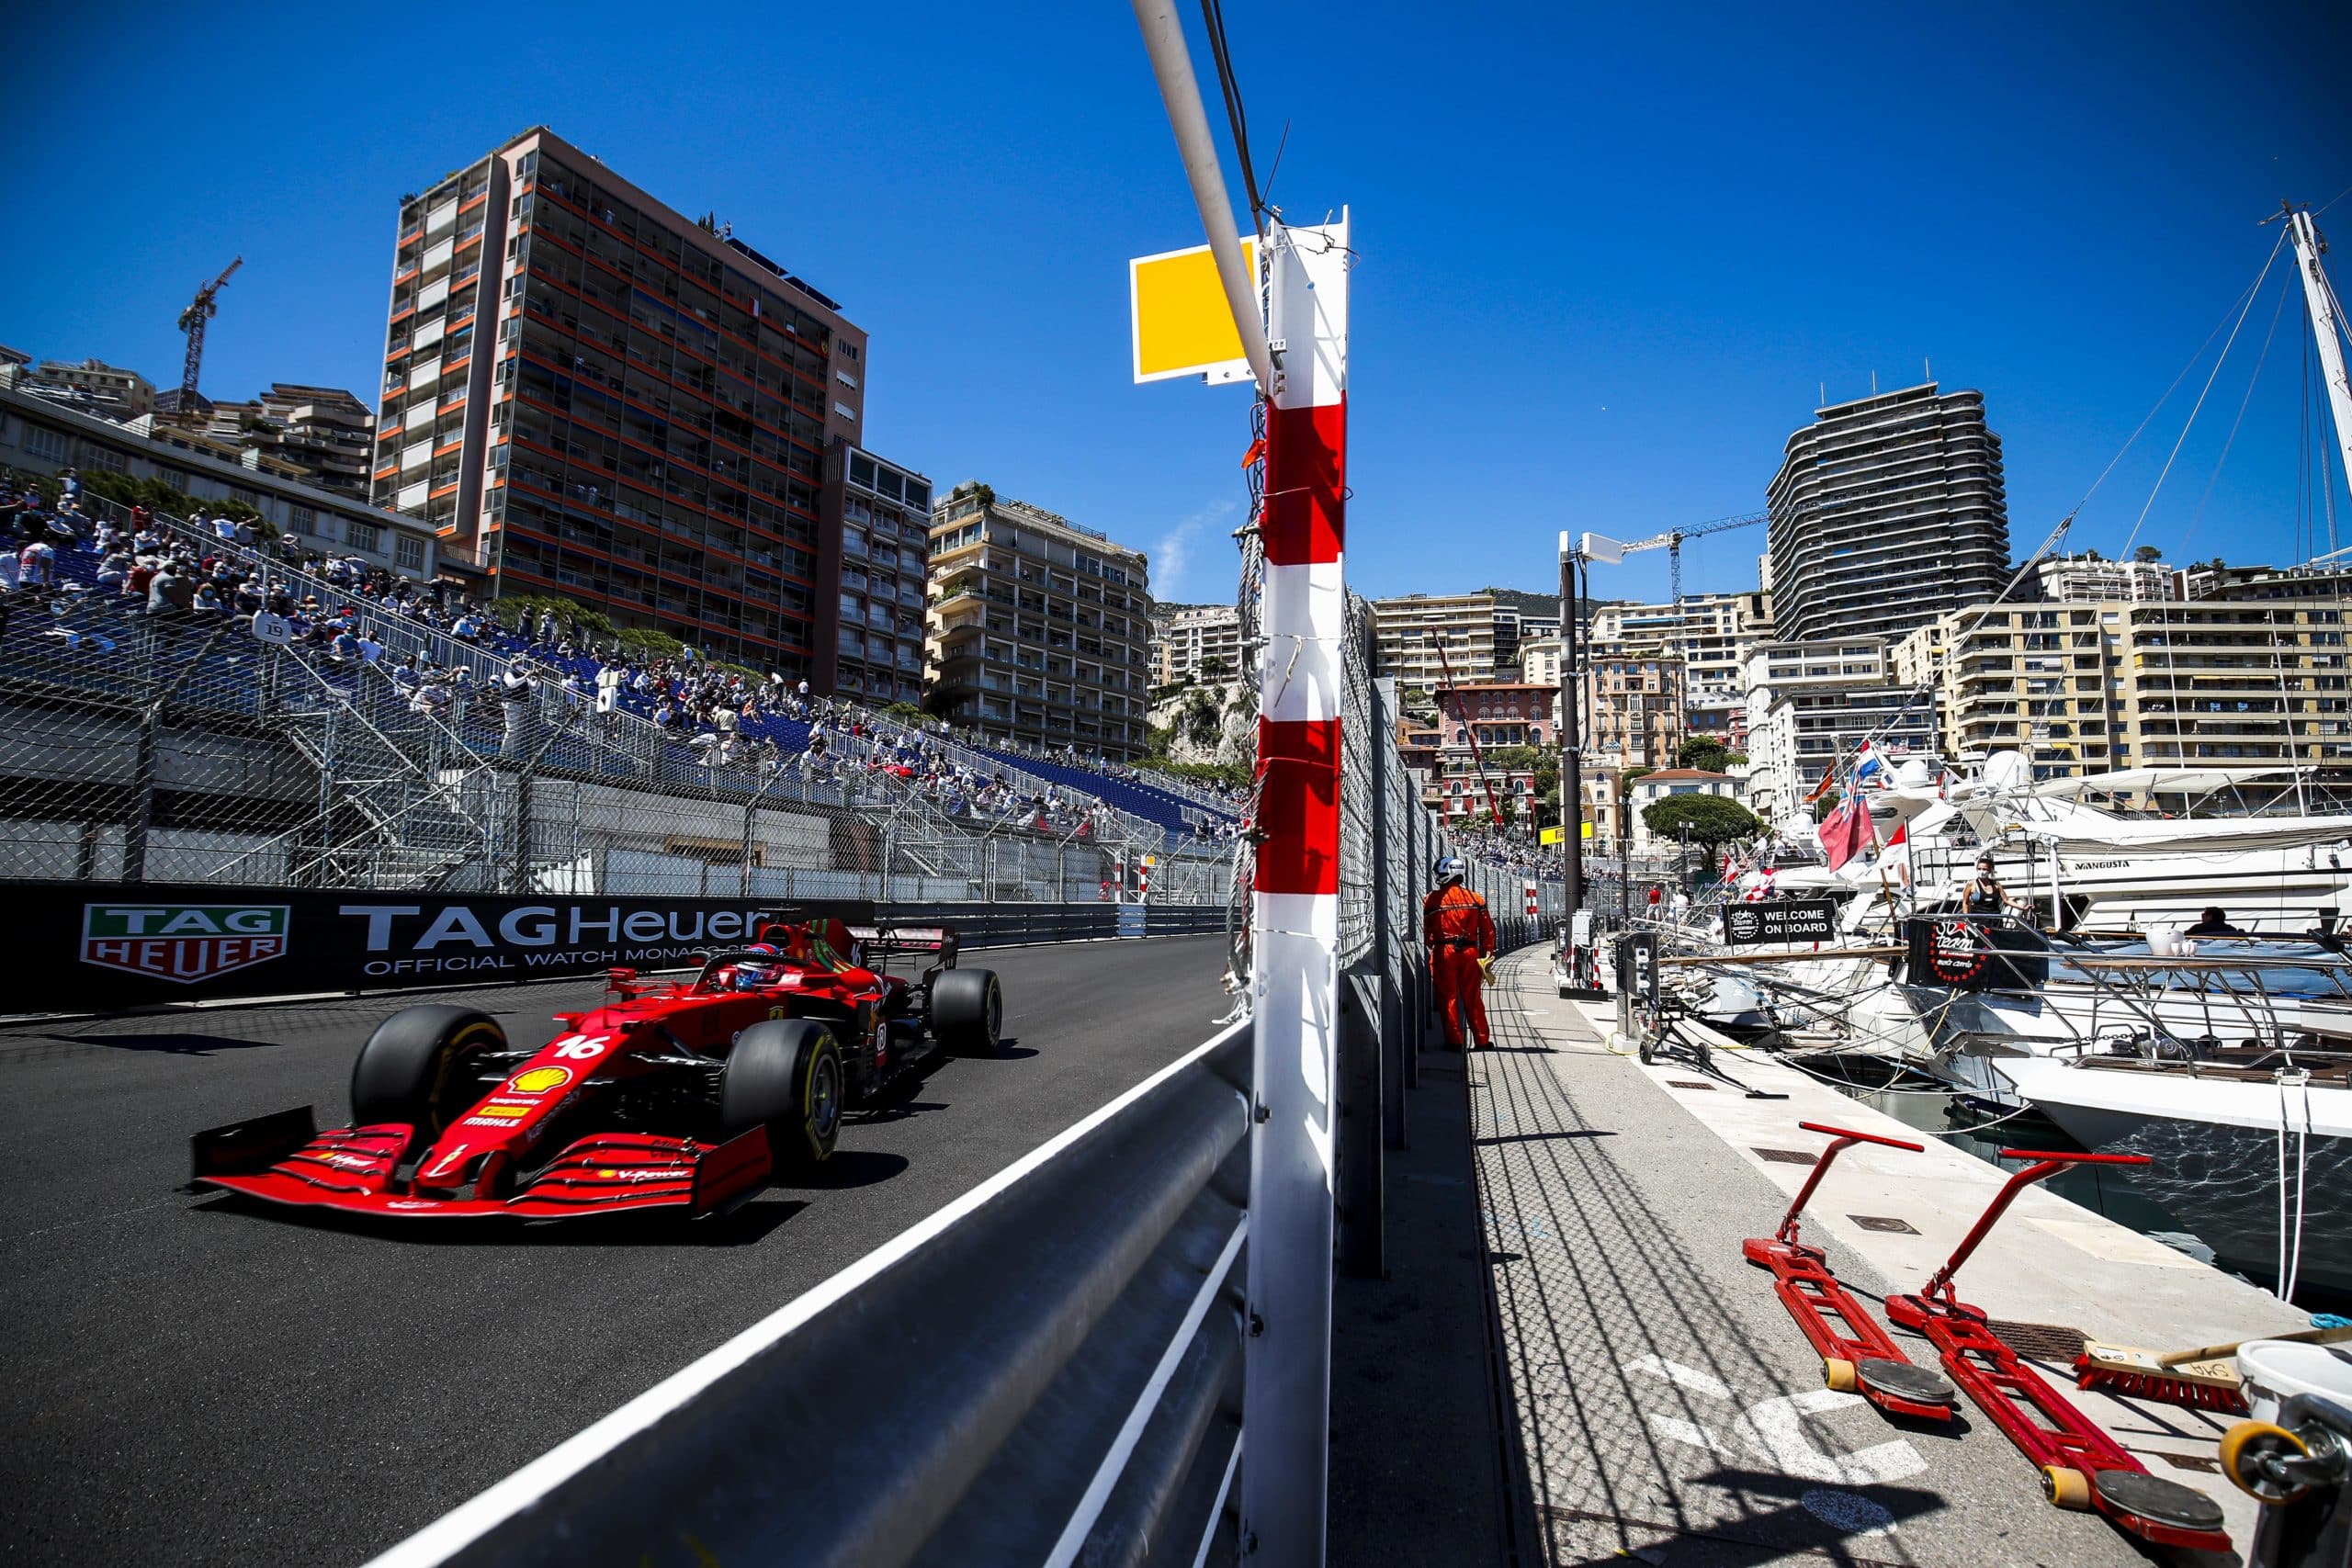 Nine decades of yachts at the Monaco Grand Prix